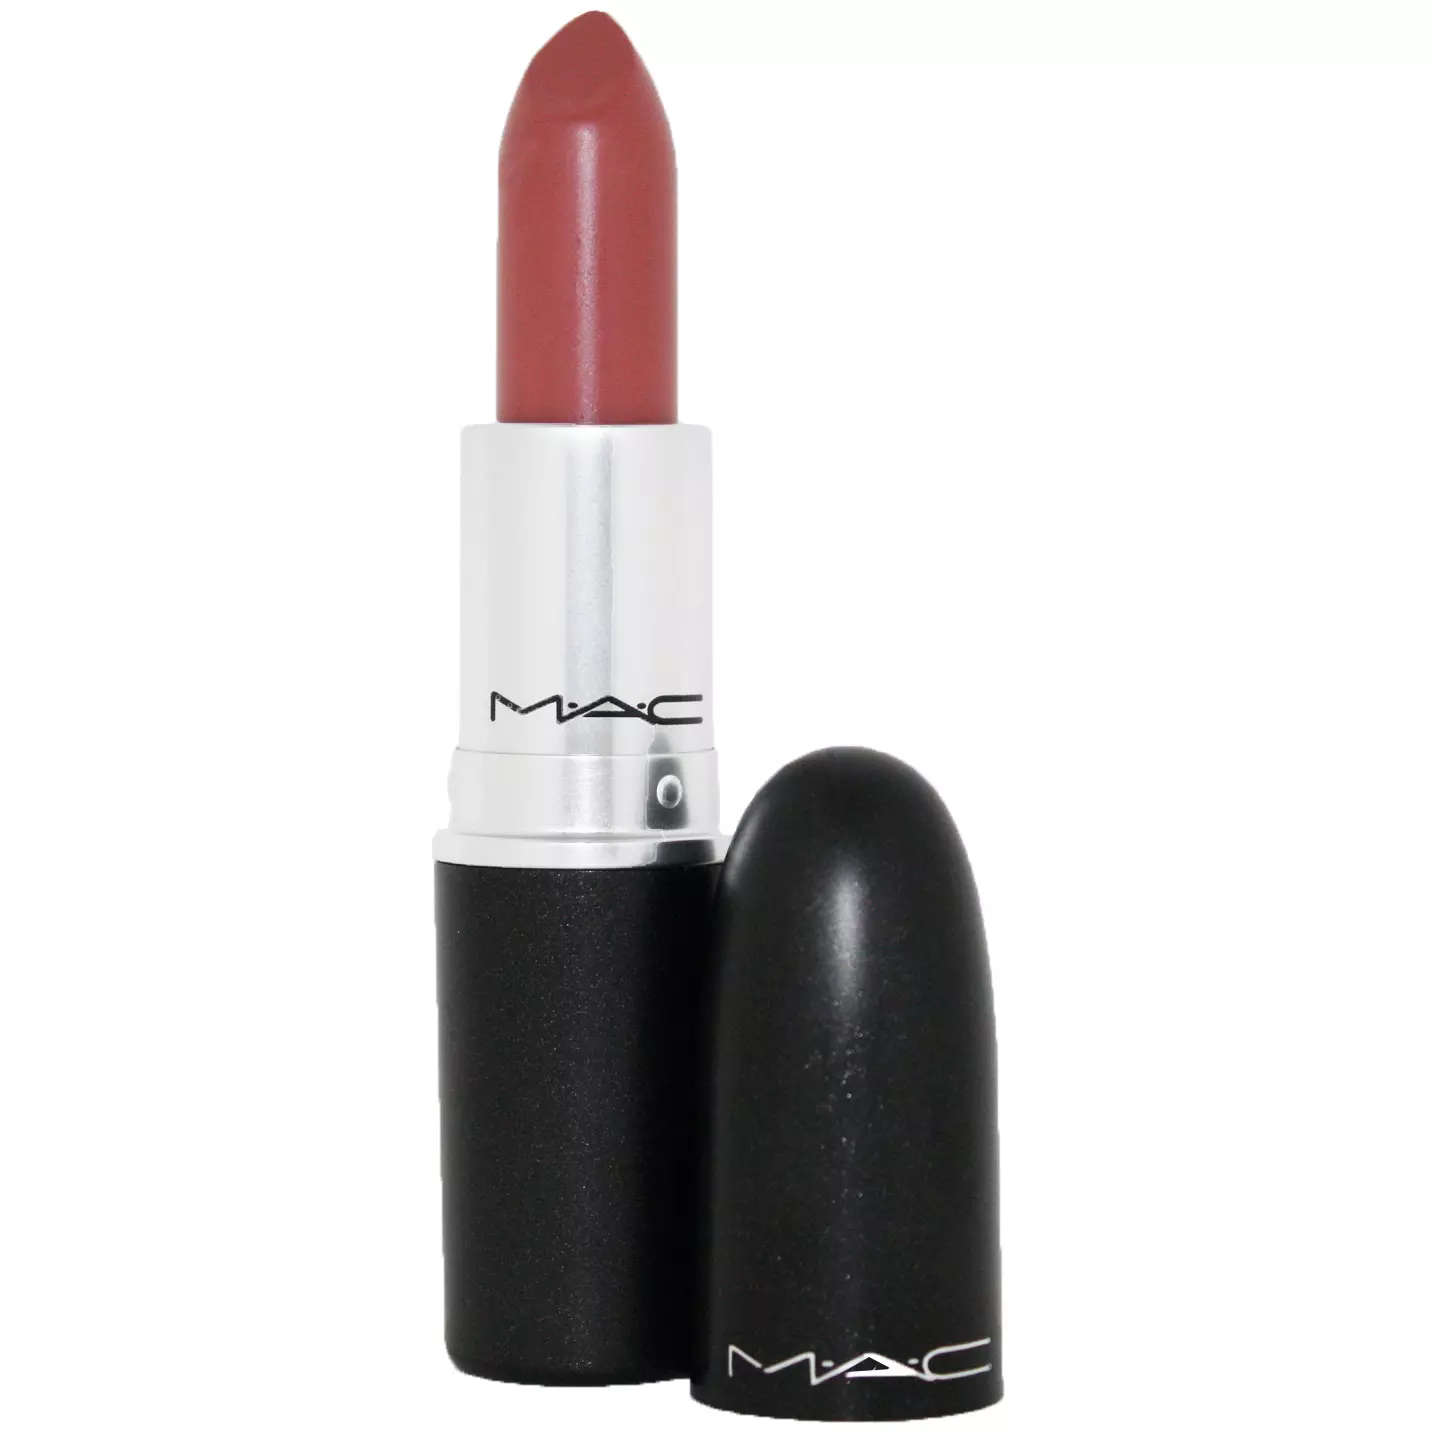 Mac Lipstick Faux Glambot Com Best Deals On Mac Makeup Cosmetics